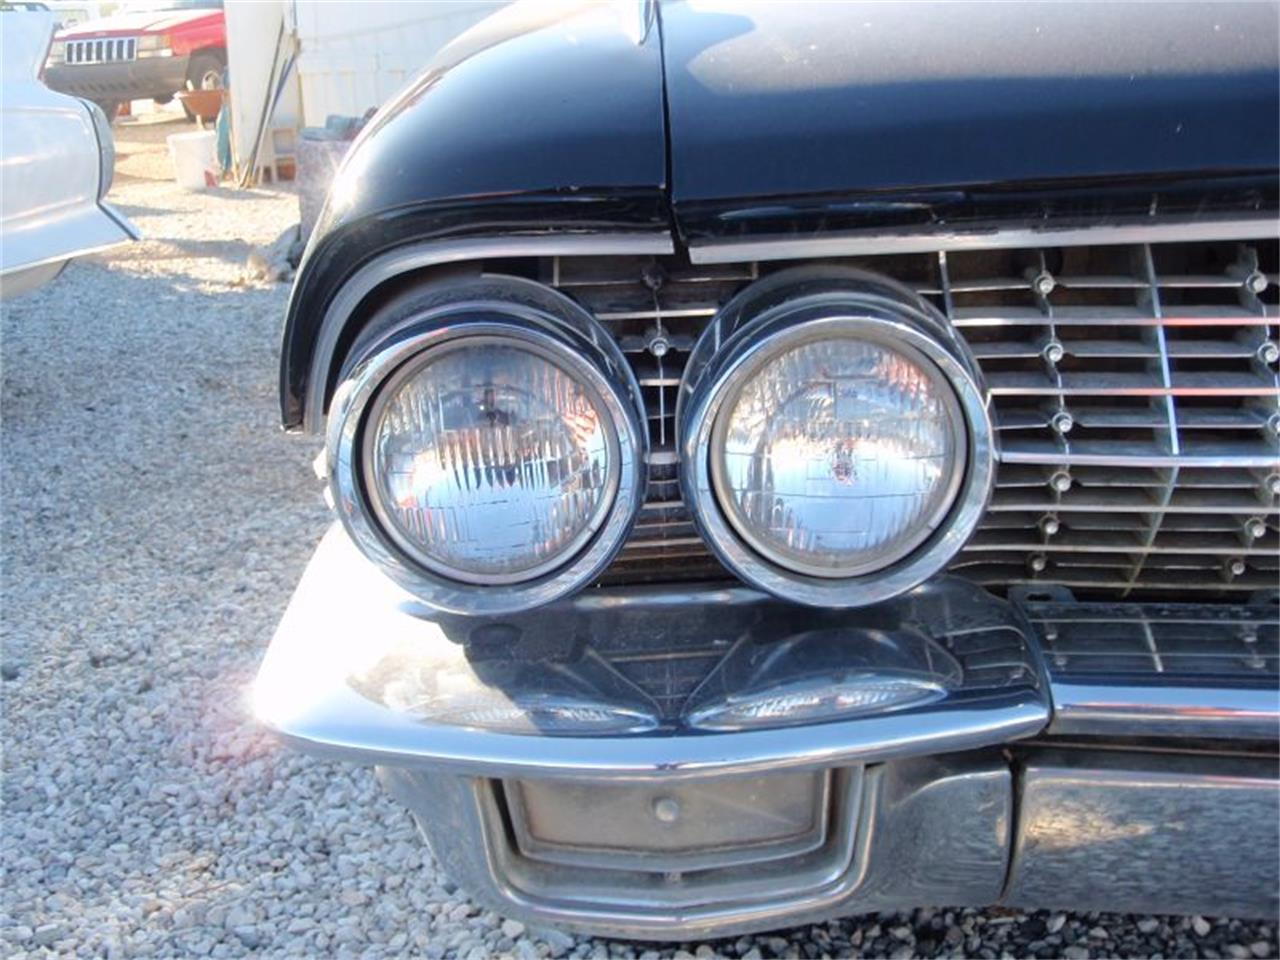 1961 Cadillac 4-Dr Sedan for sale in Quartzite, AZ – photo 34